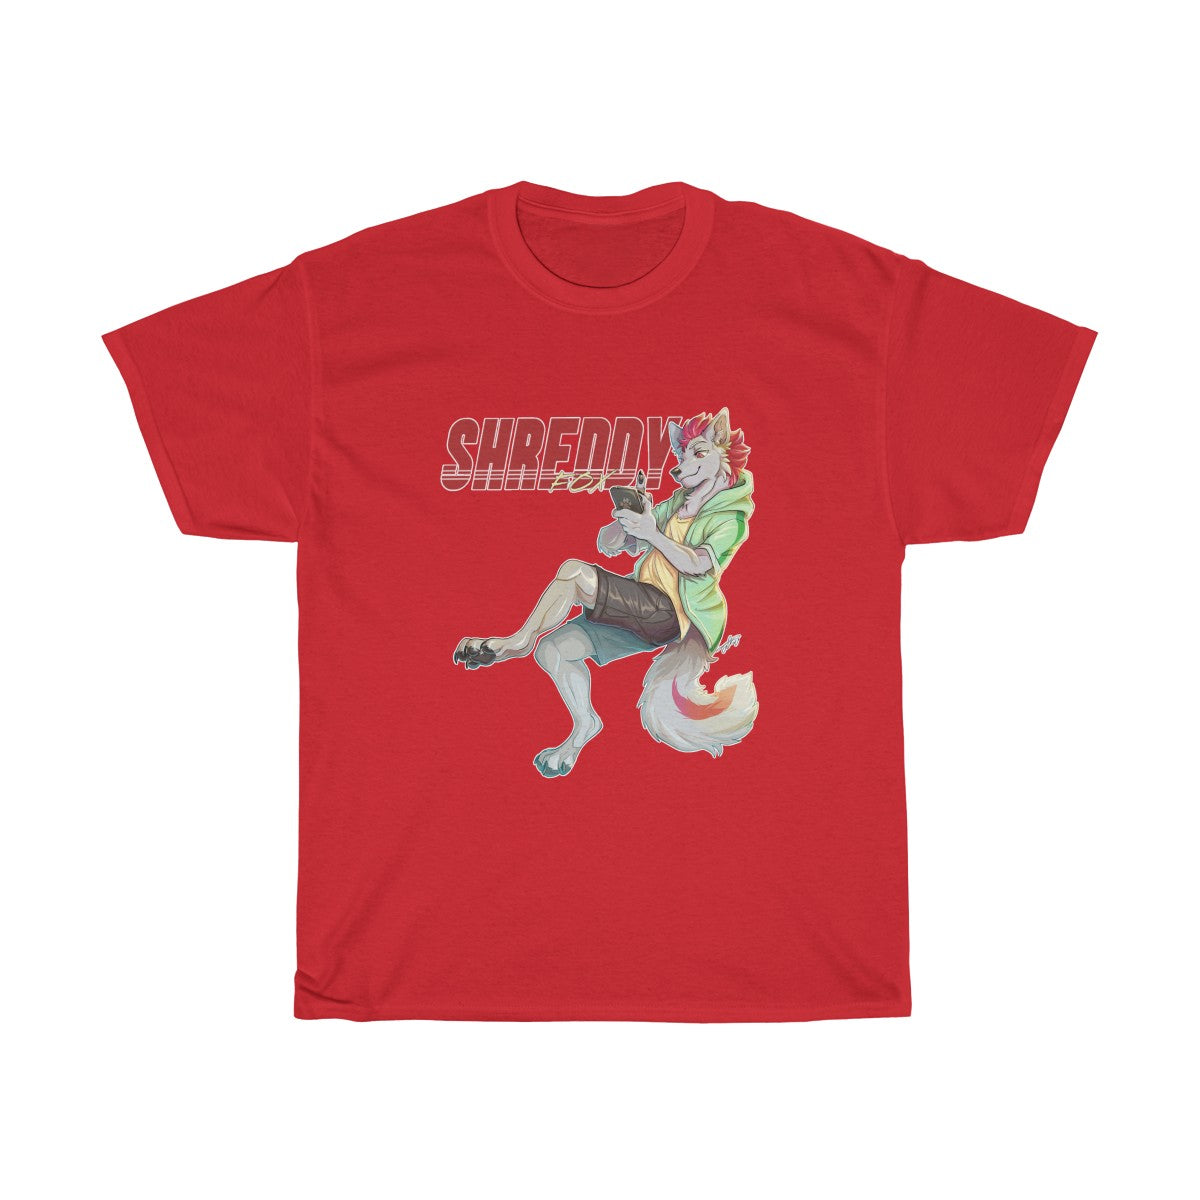 Scrolling - T-Shirt T-Shirt Shreddyfox Red S 